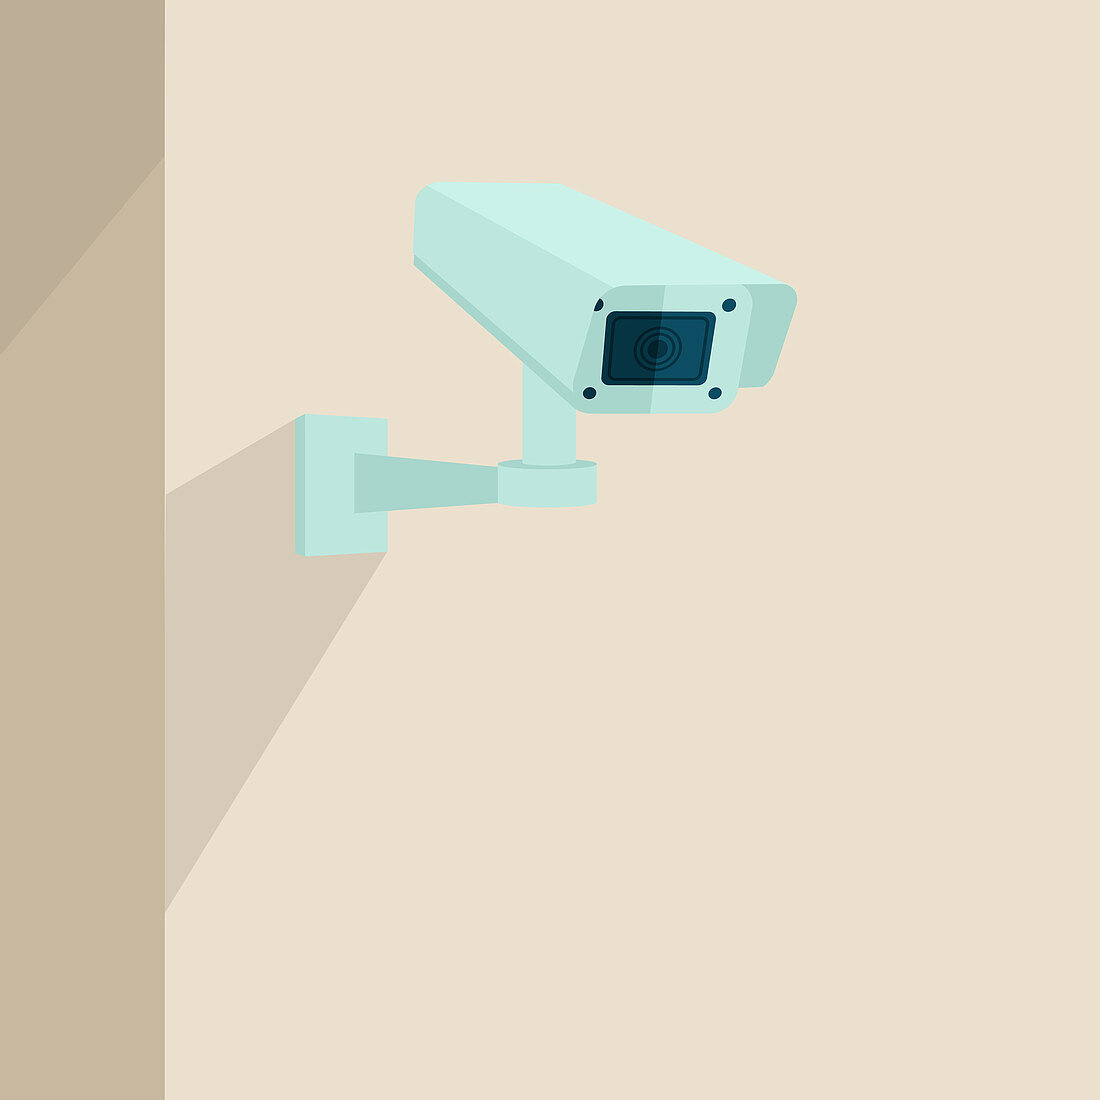 Security camera, illustration